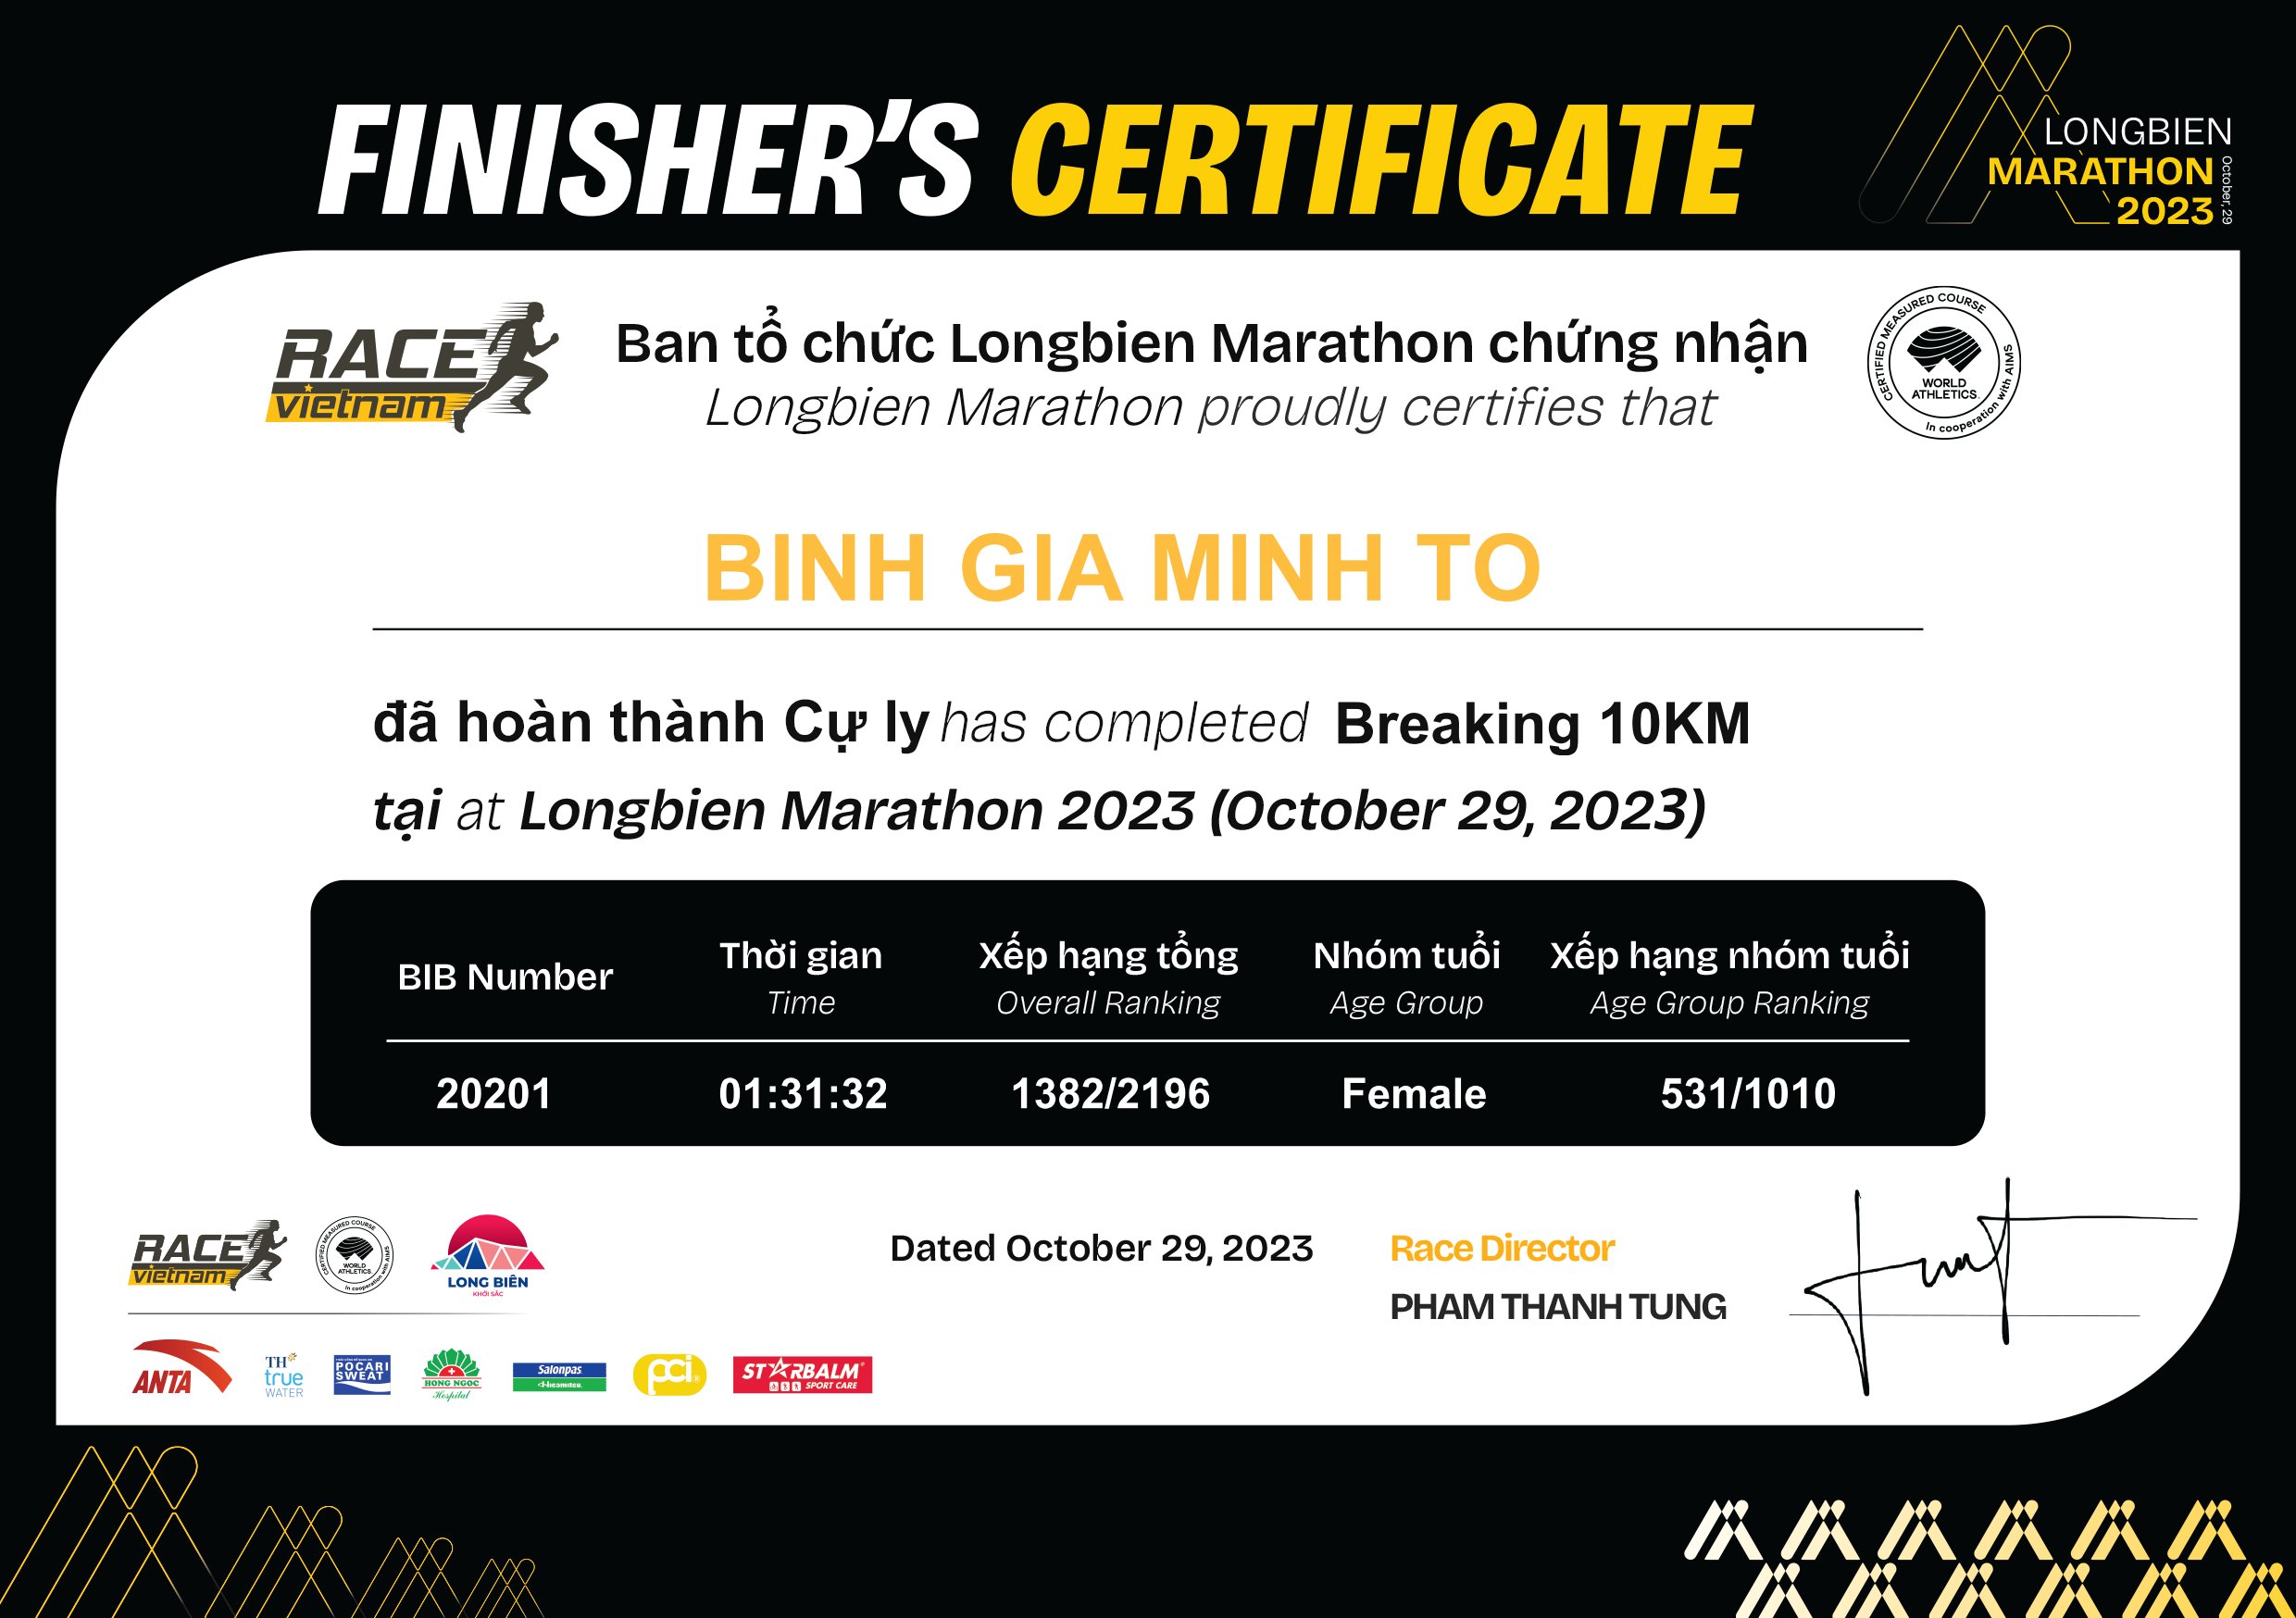 20201 - Binh Gia Minh To